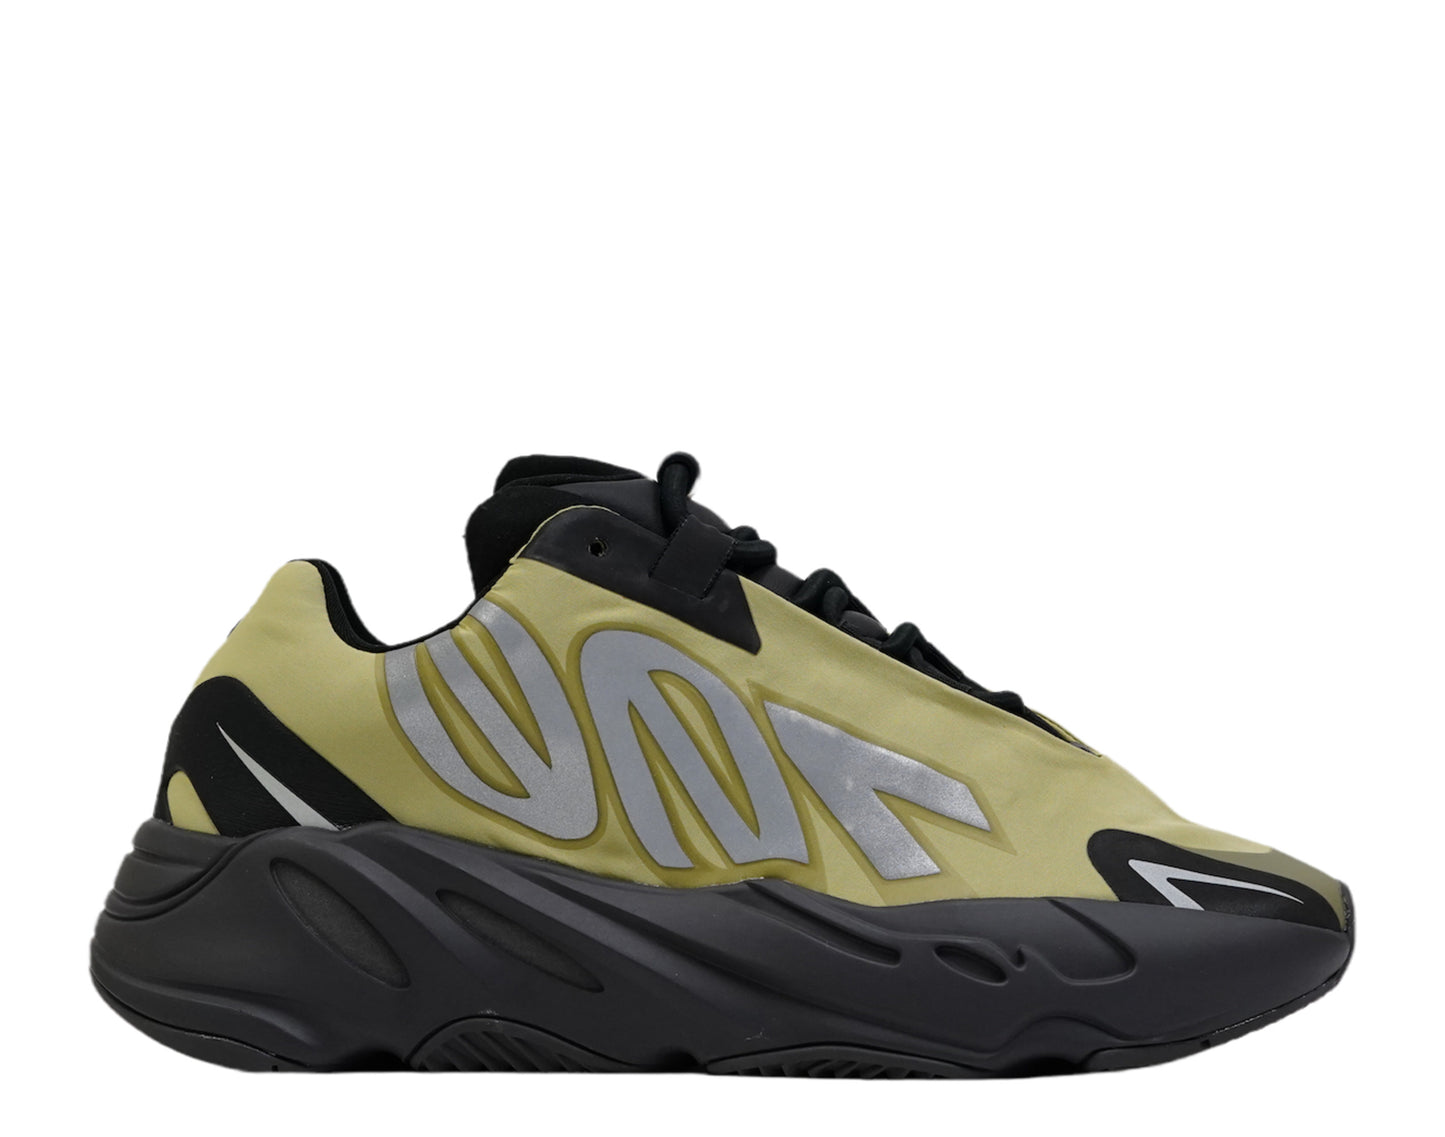 Adidas Yeezy Boost 700 MNVN Men's Shoes